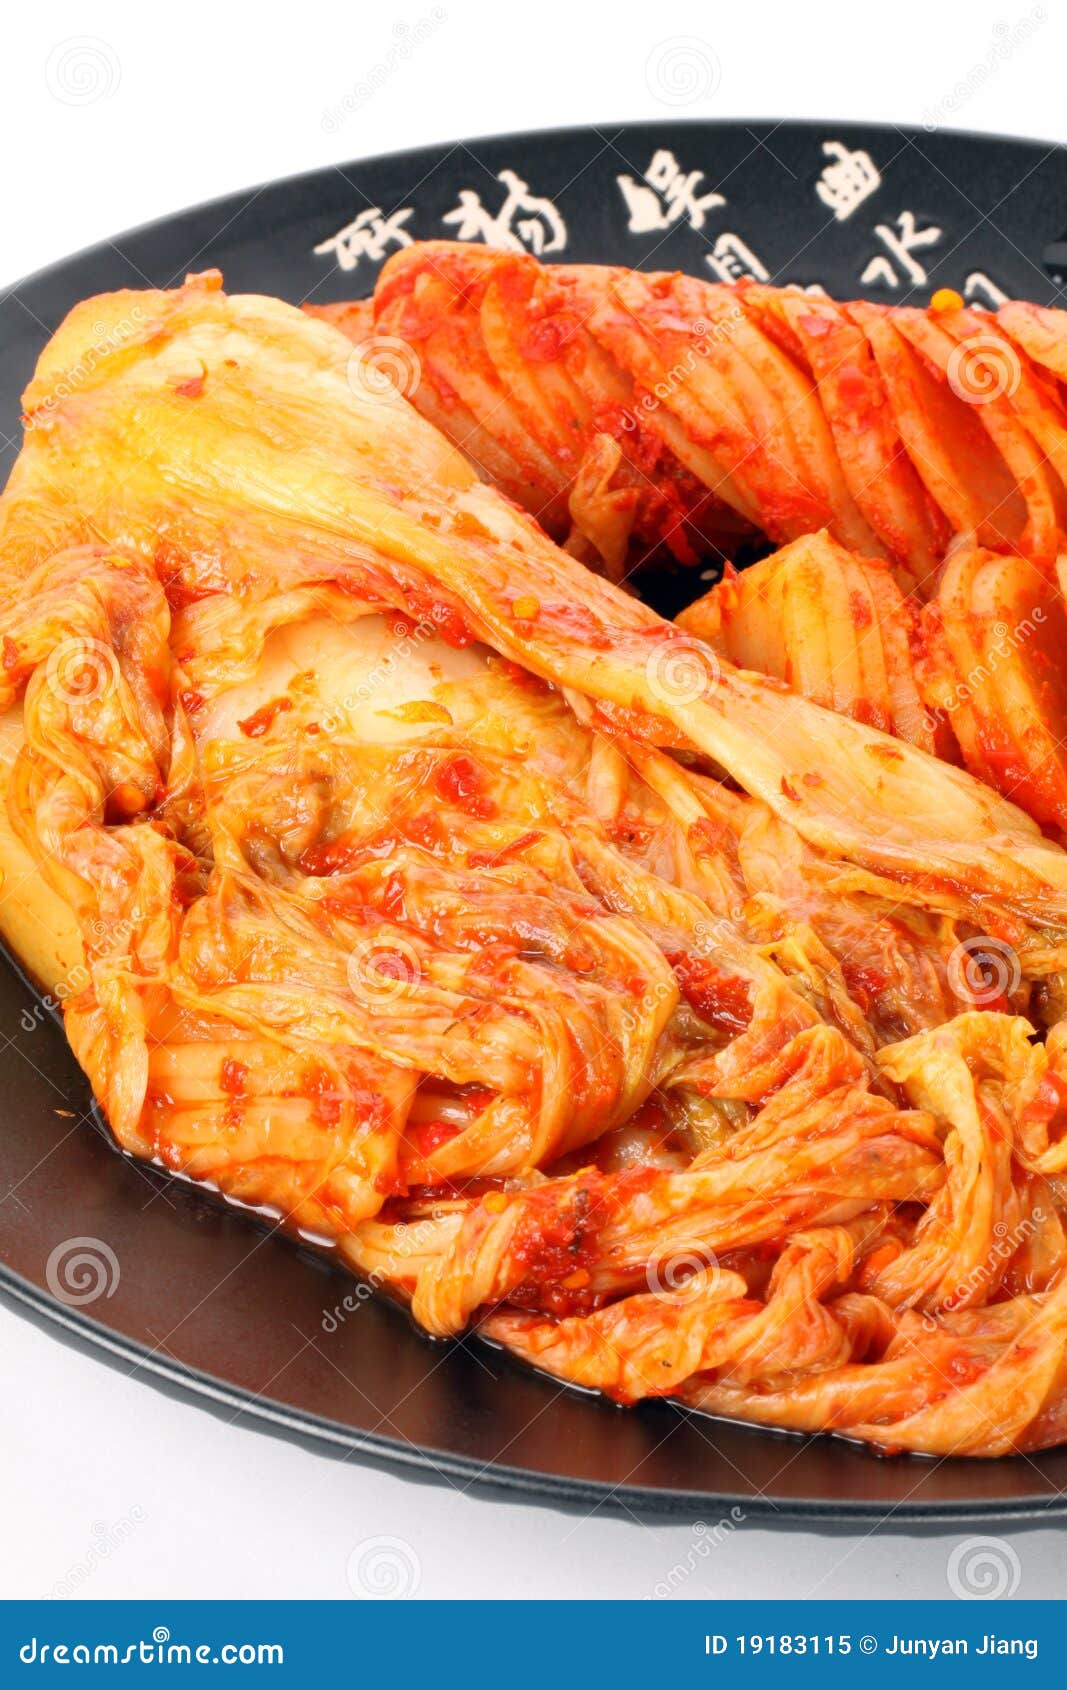 Homemade Kimchi, Korean Food Stock Image - Image of napa, korean: 19183115